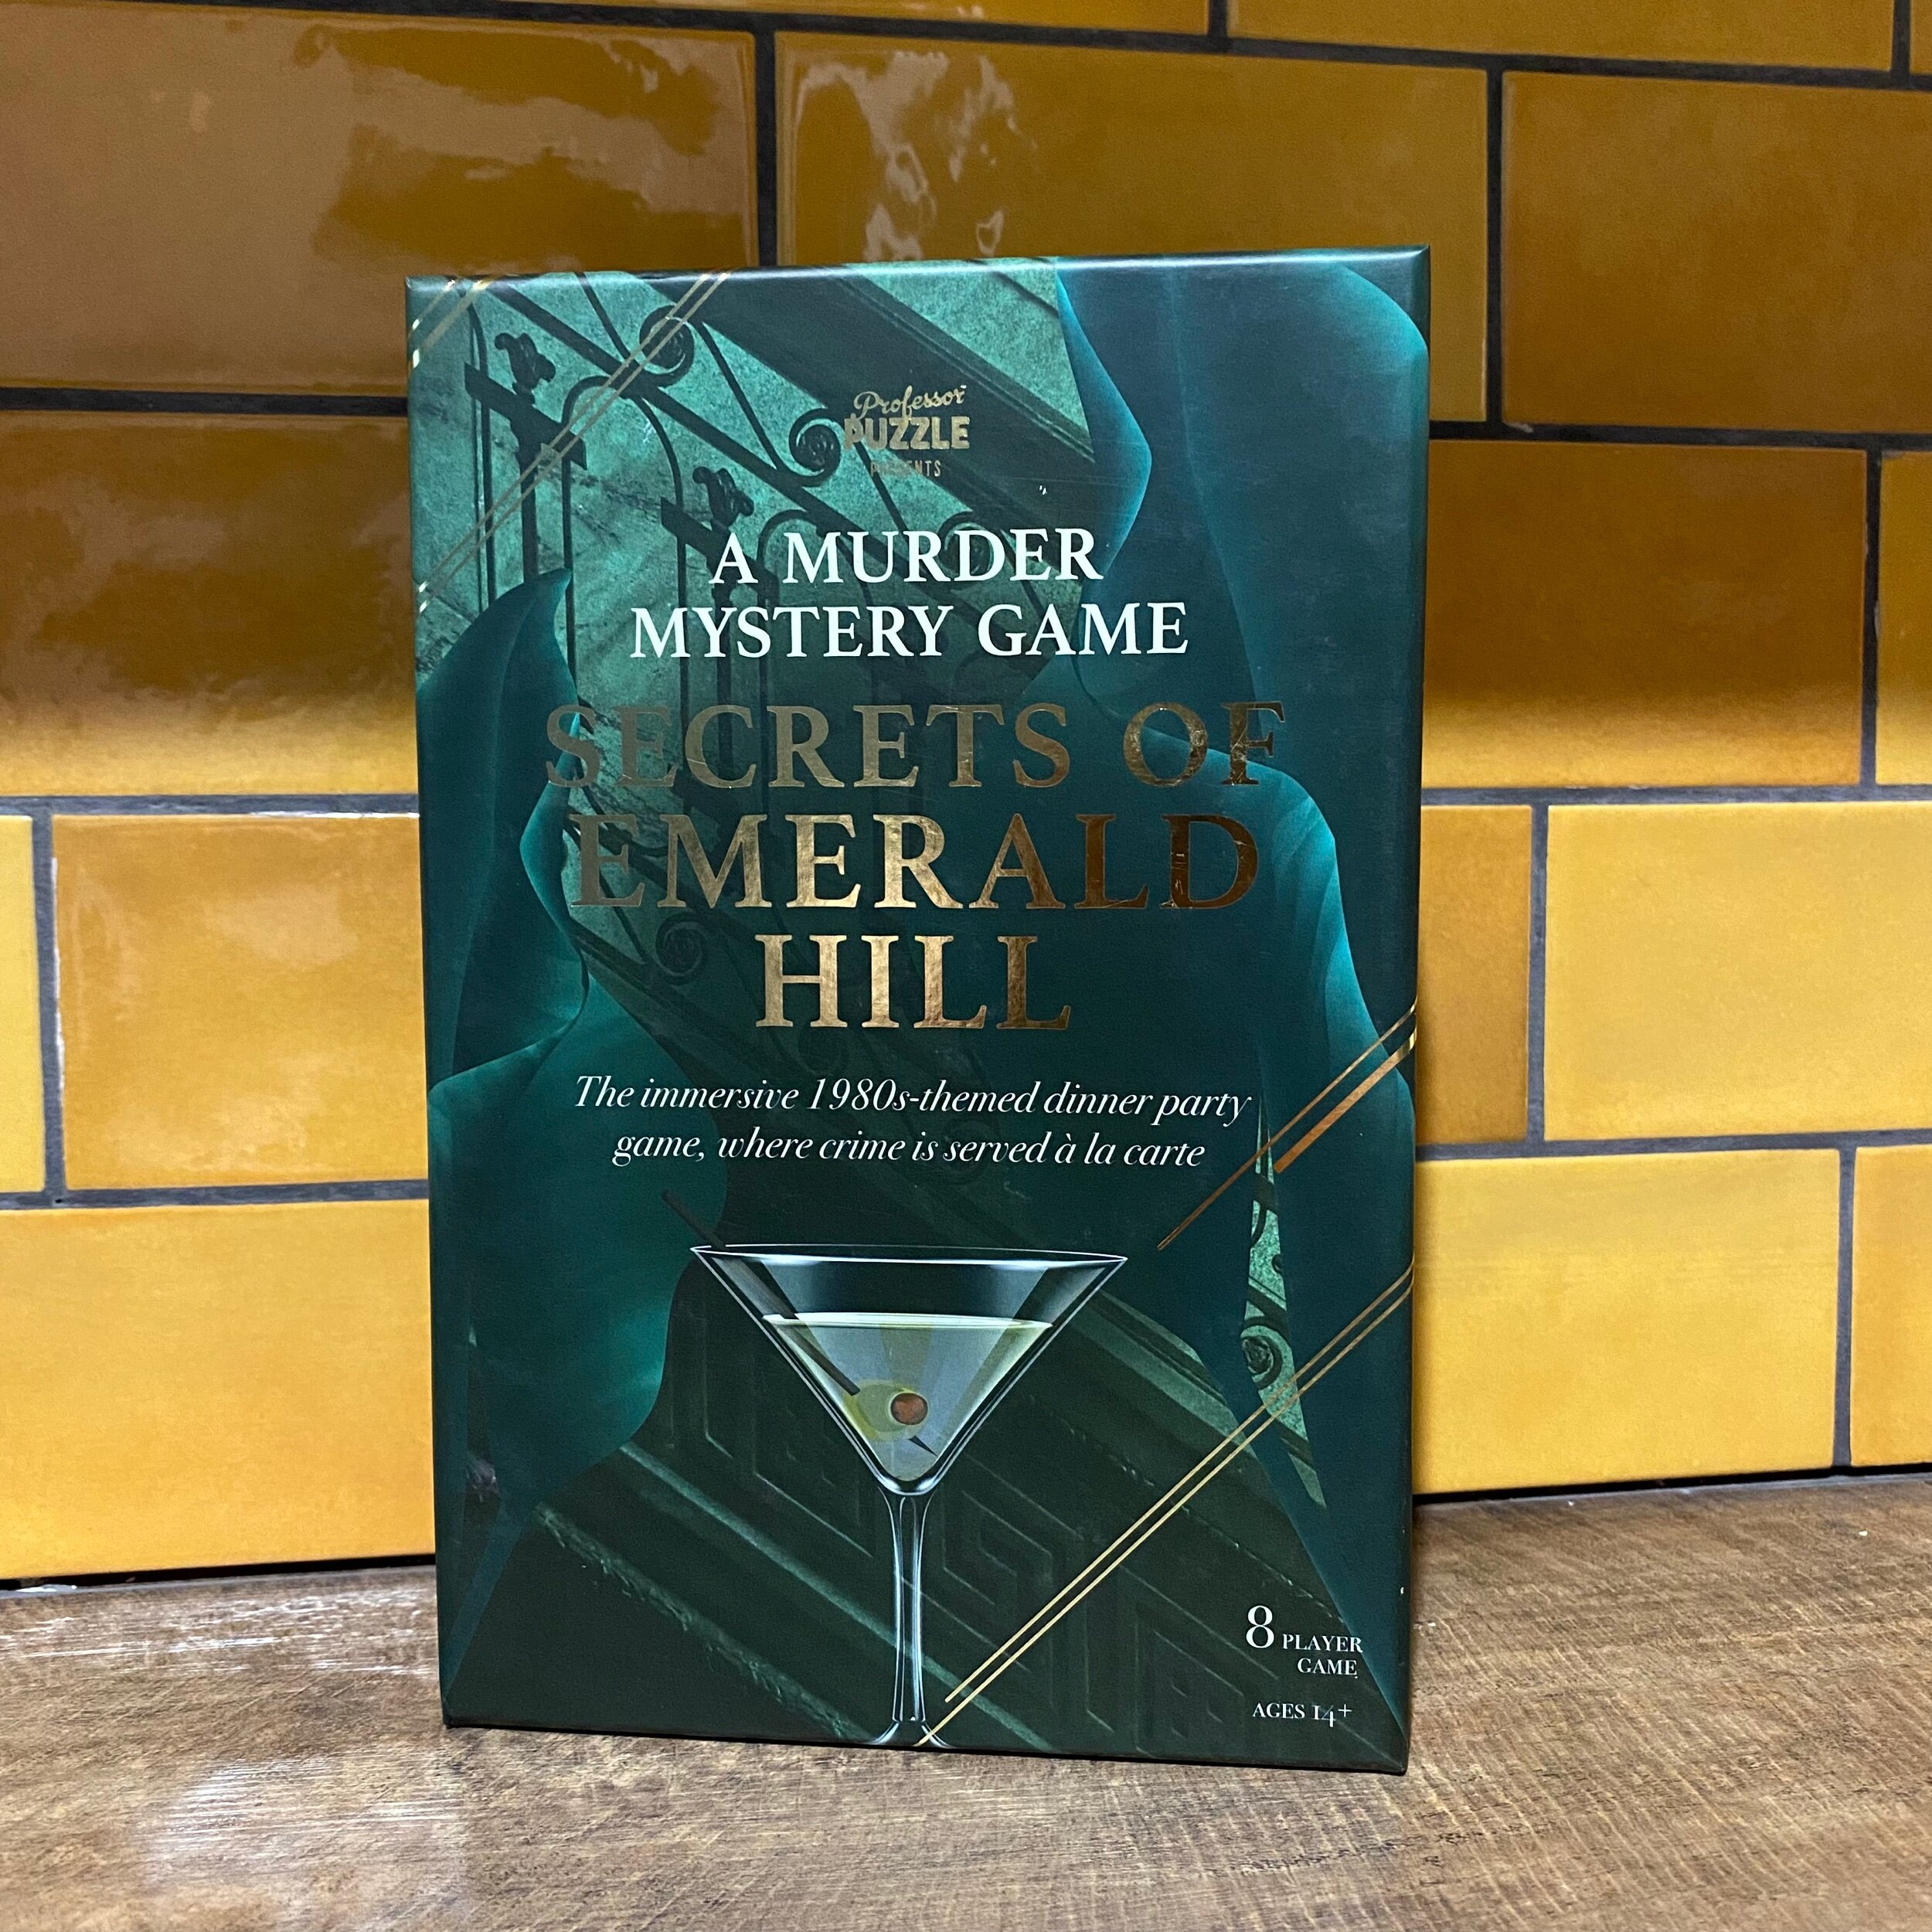 BNIB Professor Puzzle Secrets of Emerald HILL Party game 